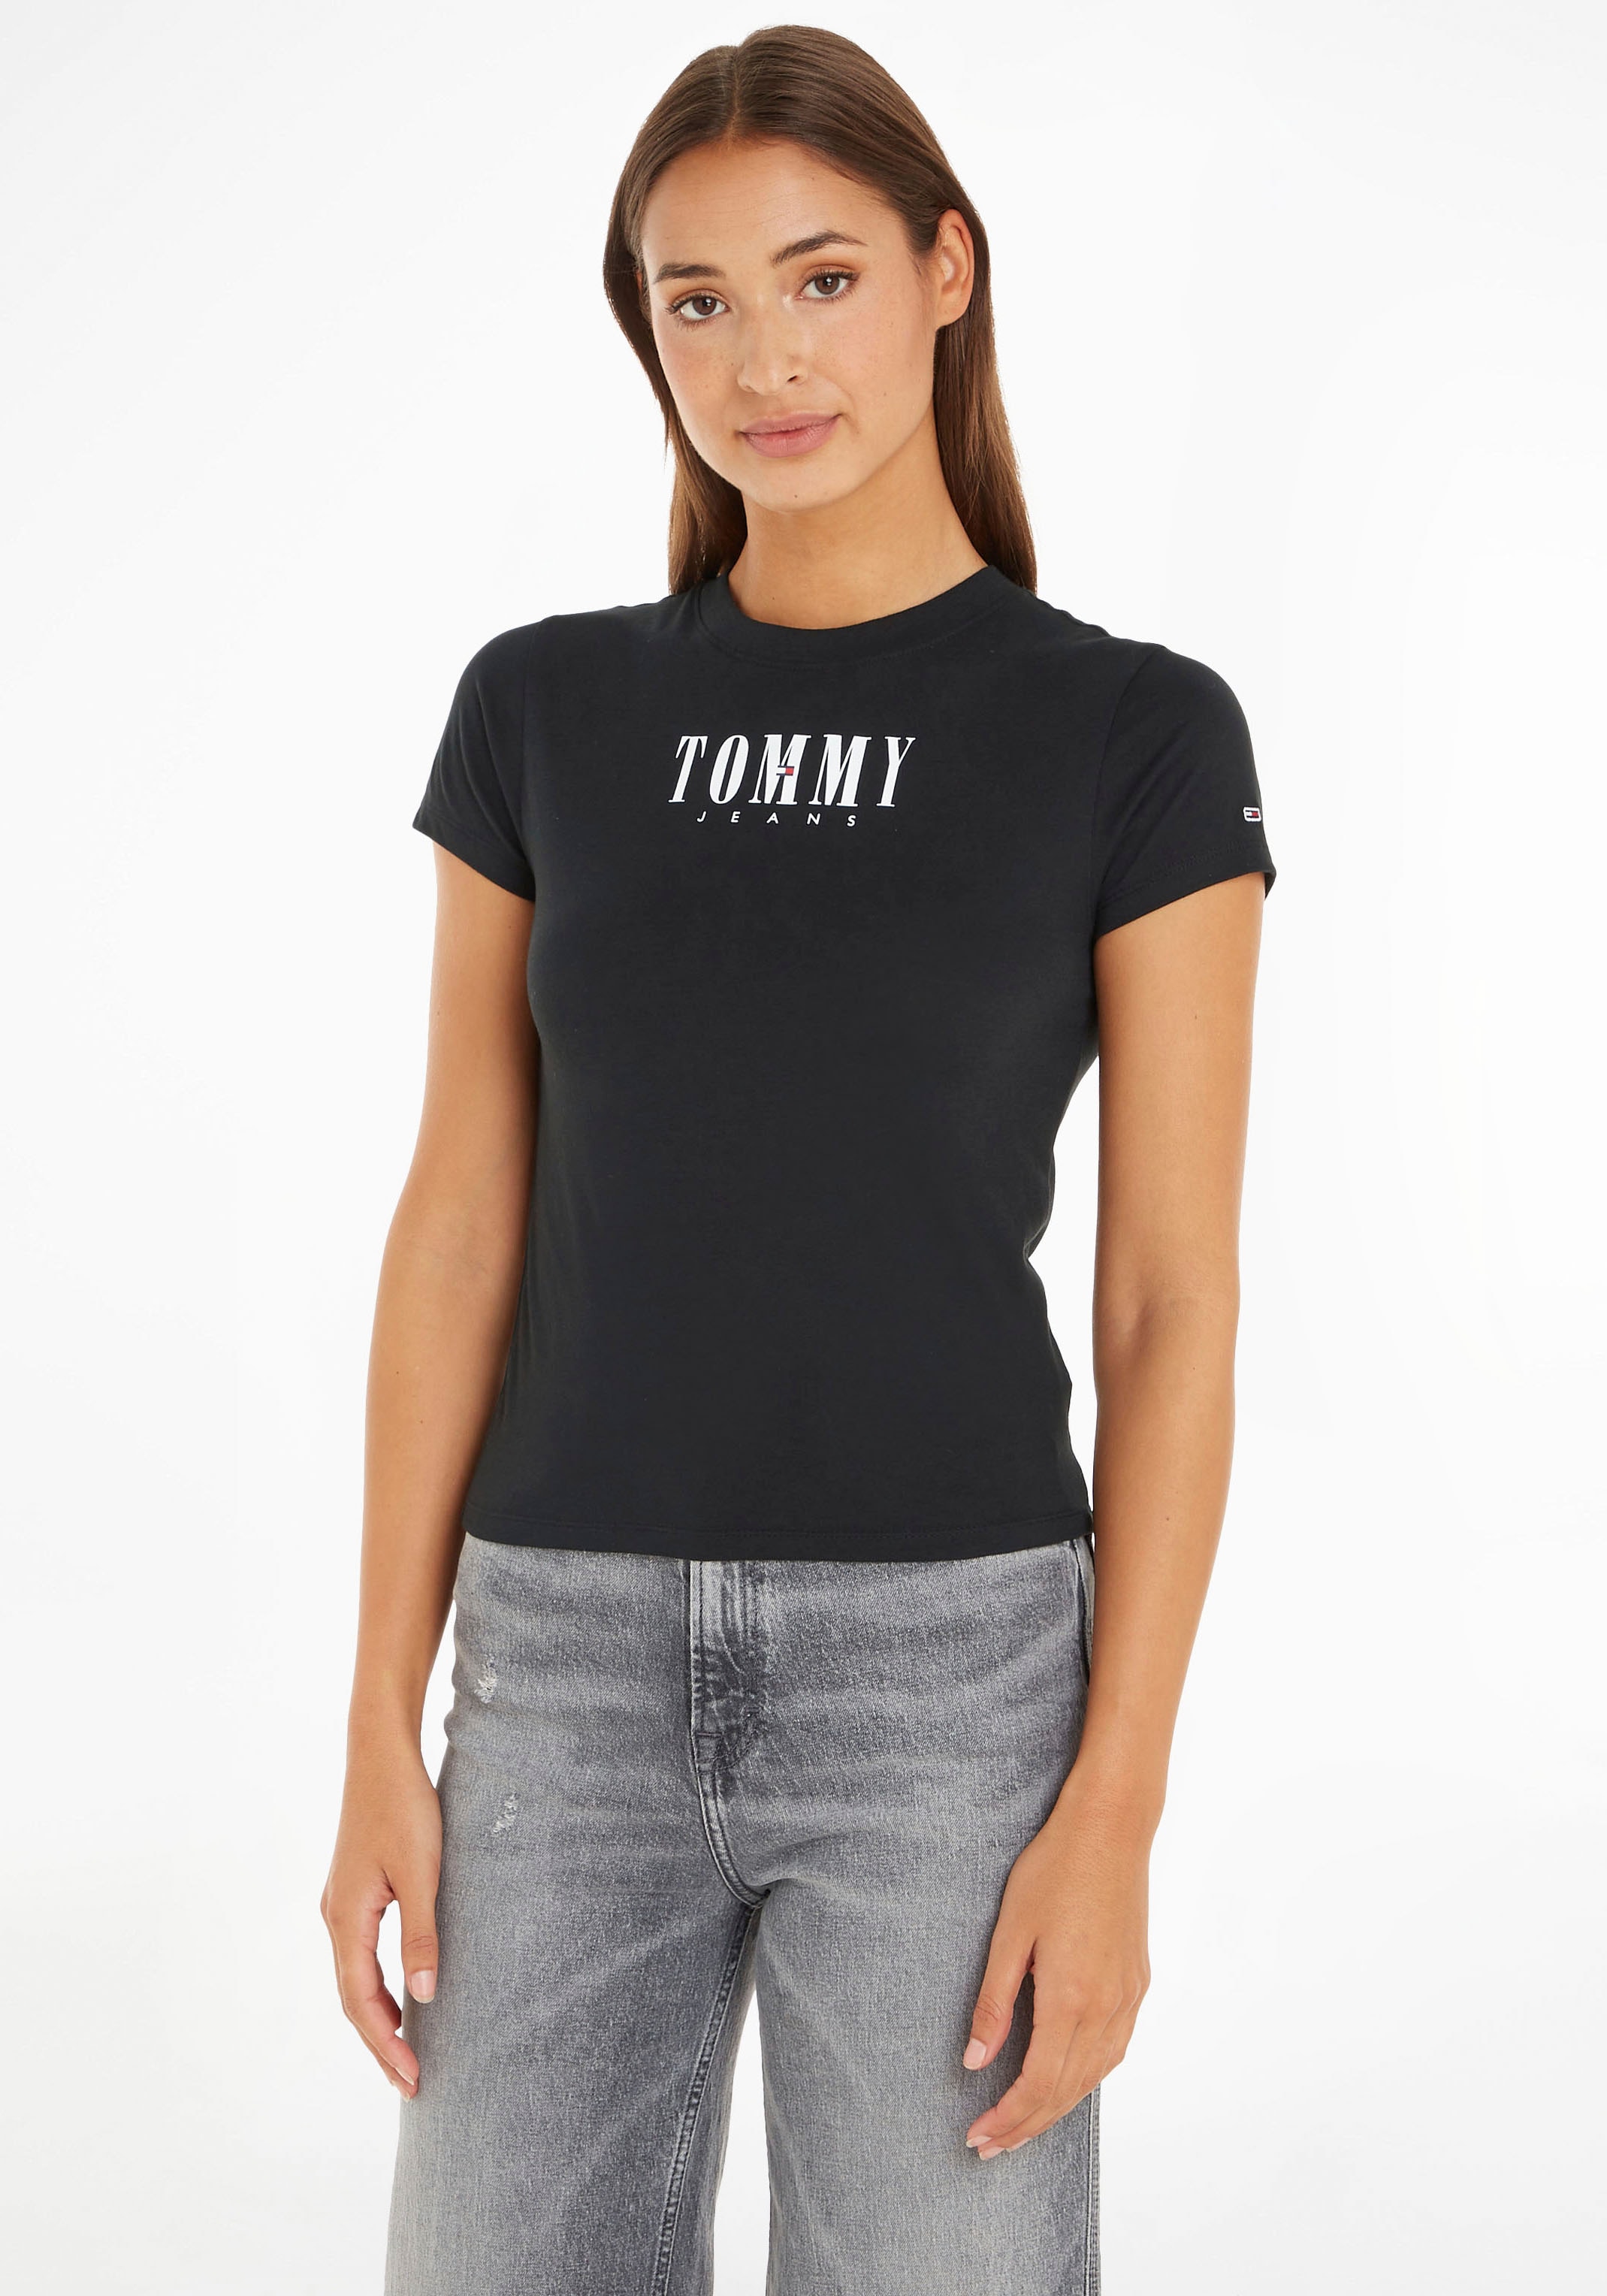 SS«, 2 LOGO »TJW ♕ Tommy ESSENTIAL Logo-Schriftzug Tommy bei mit BABY Jeans Jeans Kurzarmshirt